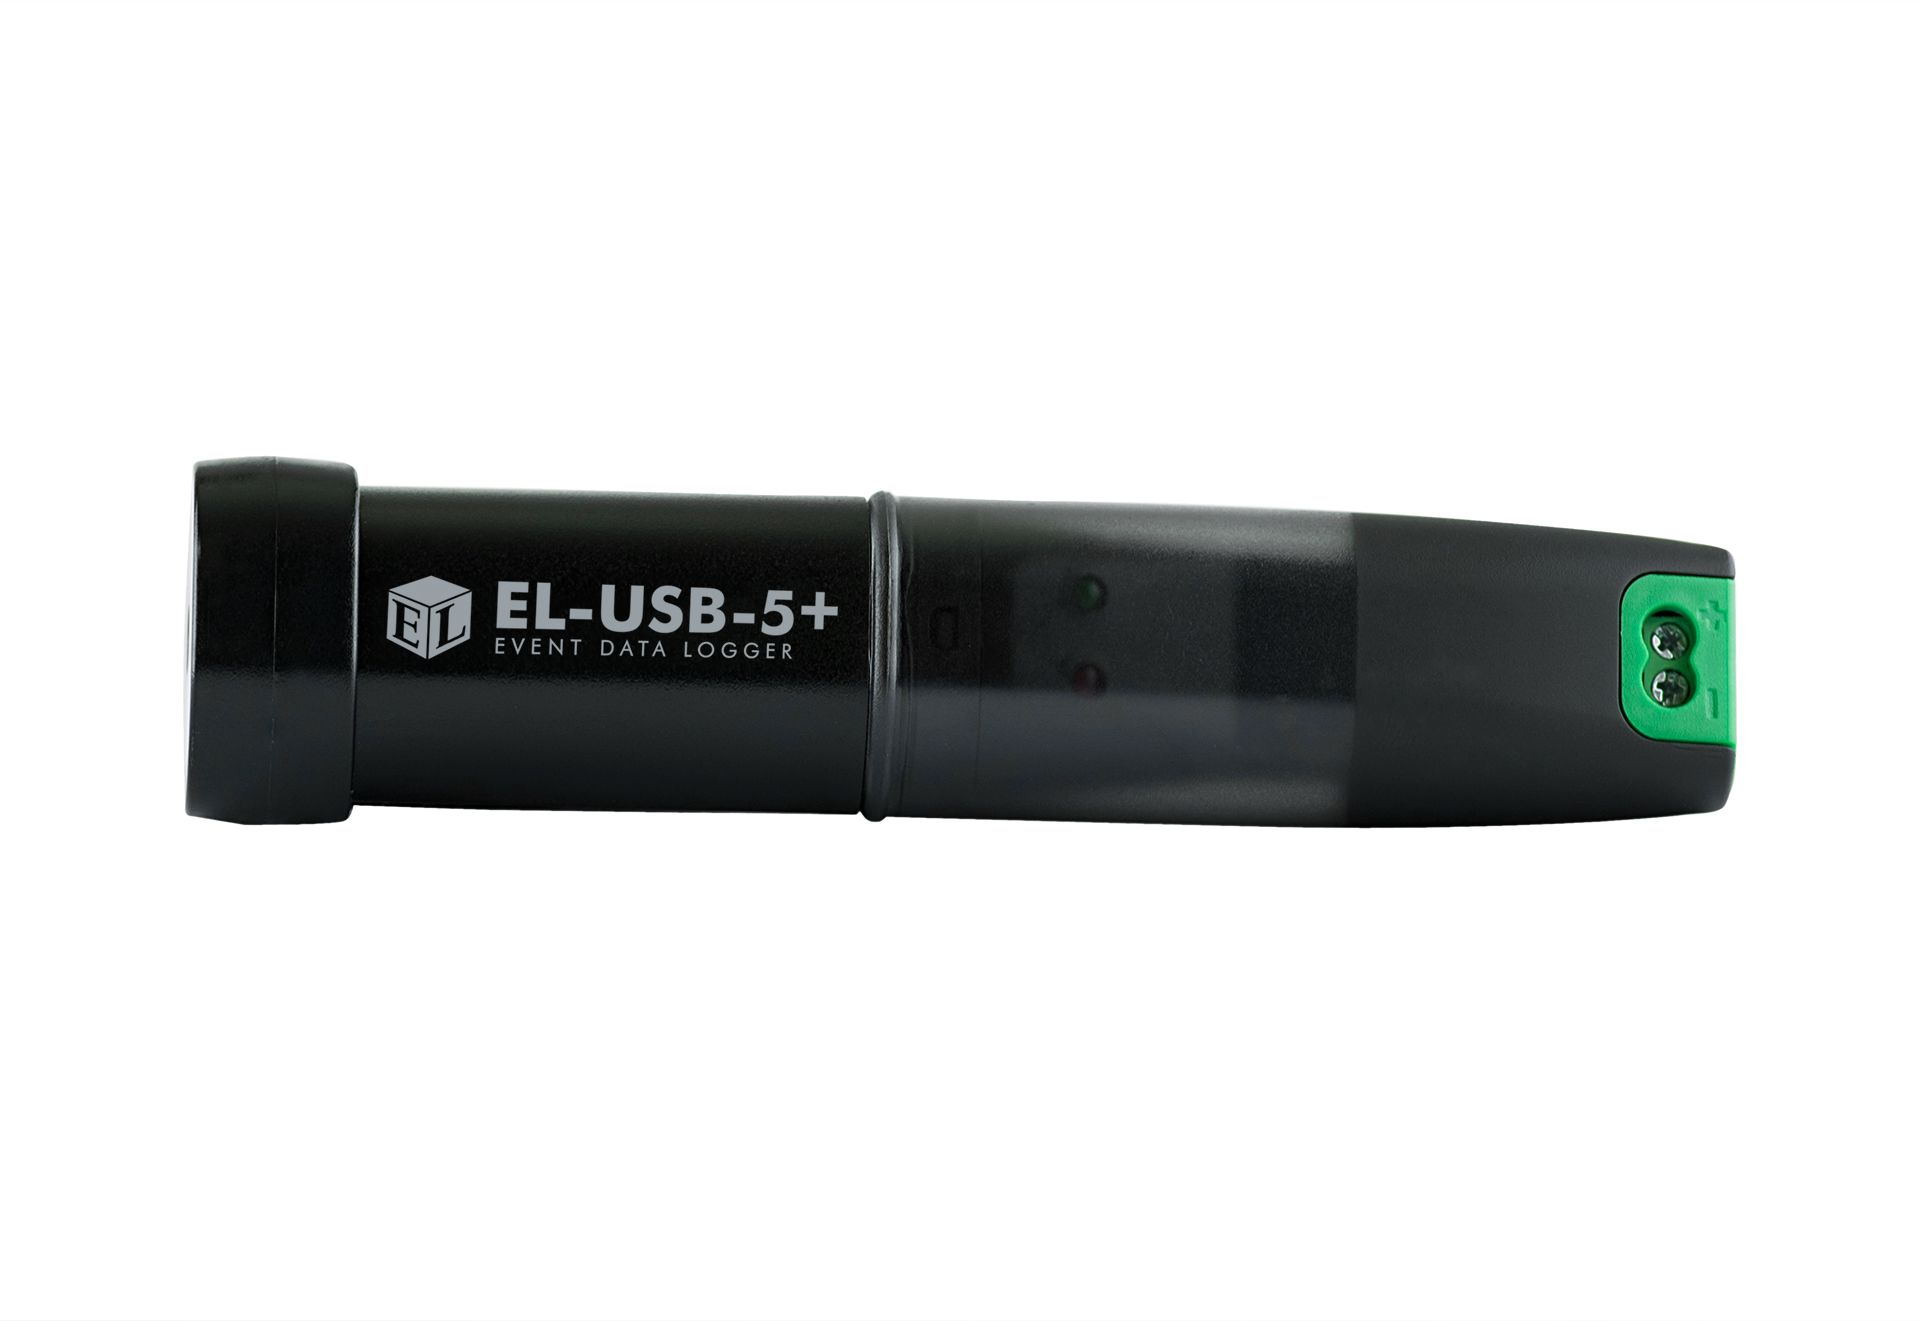 Lascar EL-USB-5+ Event Data Logger, 1 Input Channel(s), Battery-Powered